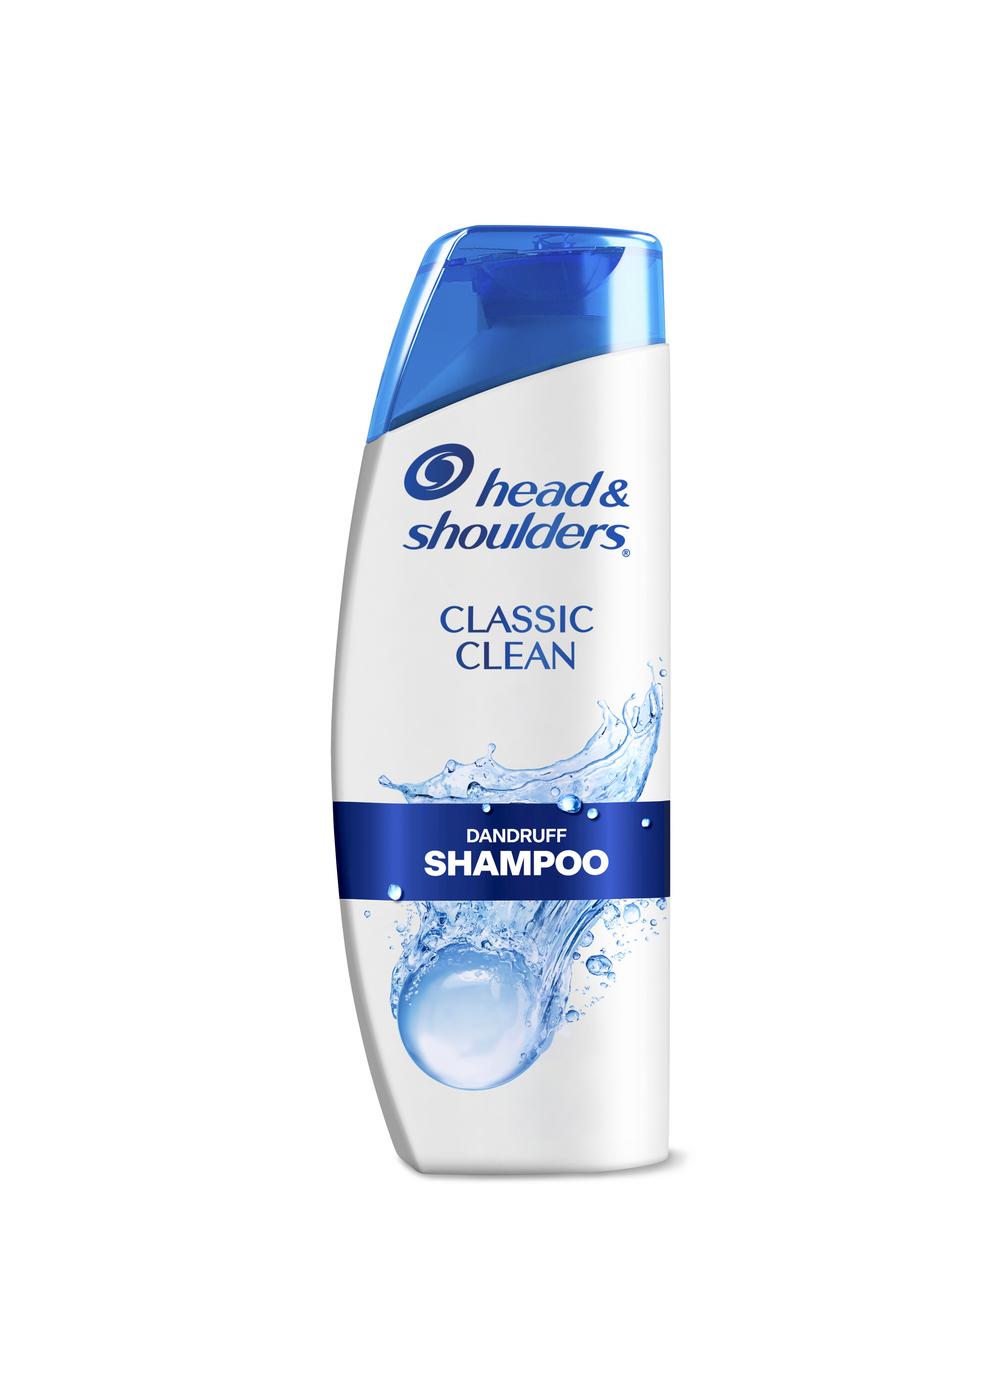 Head & Shoulders Dandruff Shampoo - Classic Clean; image 3 of 10